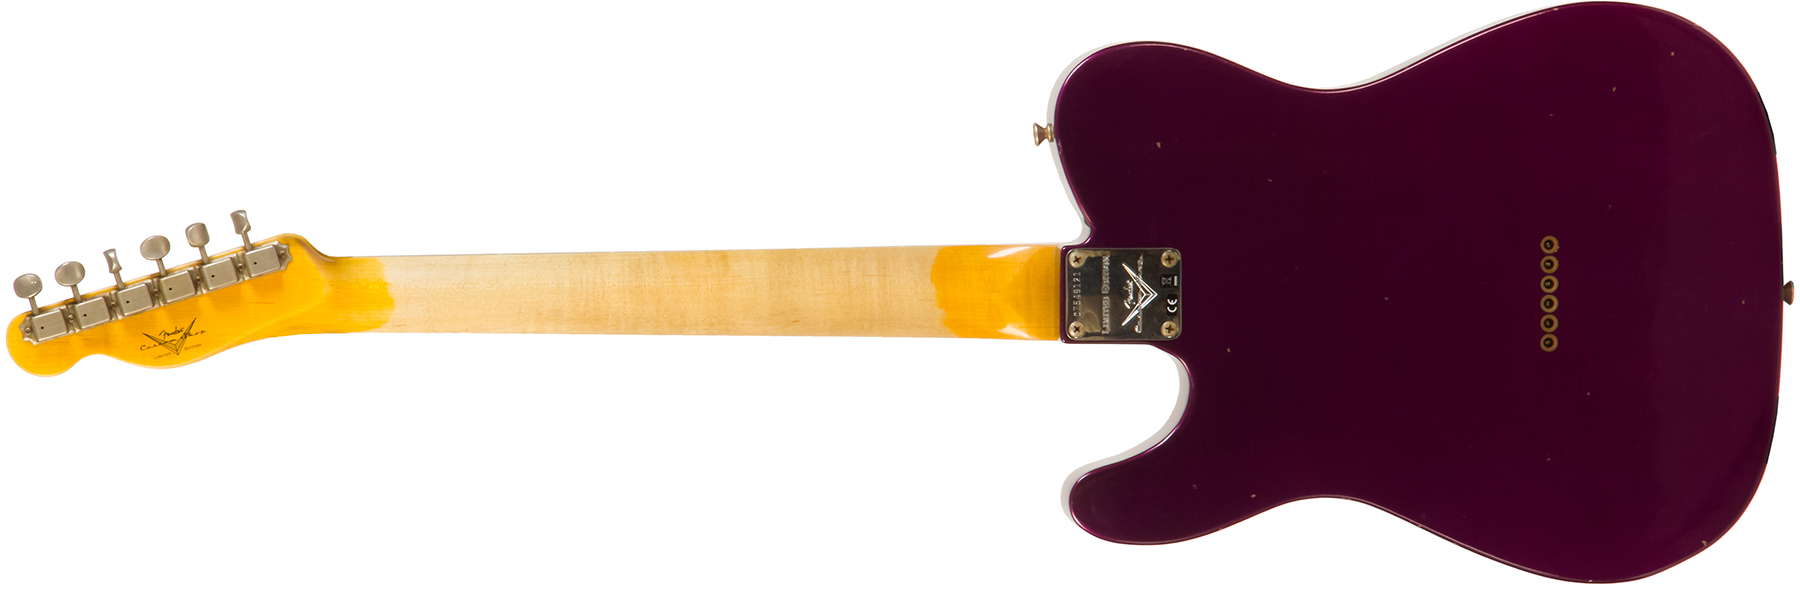 Fender Custom Shop Tele 1960 Rw #cz549121 - Journeyman Relic Purple Metallic - Tel shape electric guitar - Variation 1